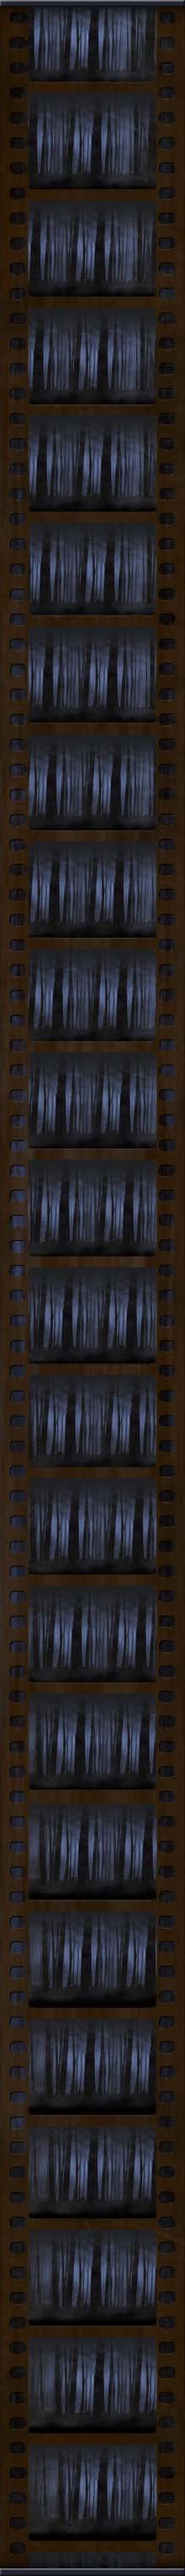 filmstrip scale